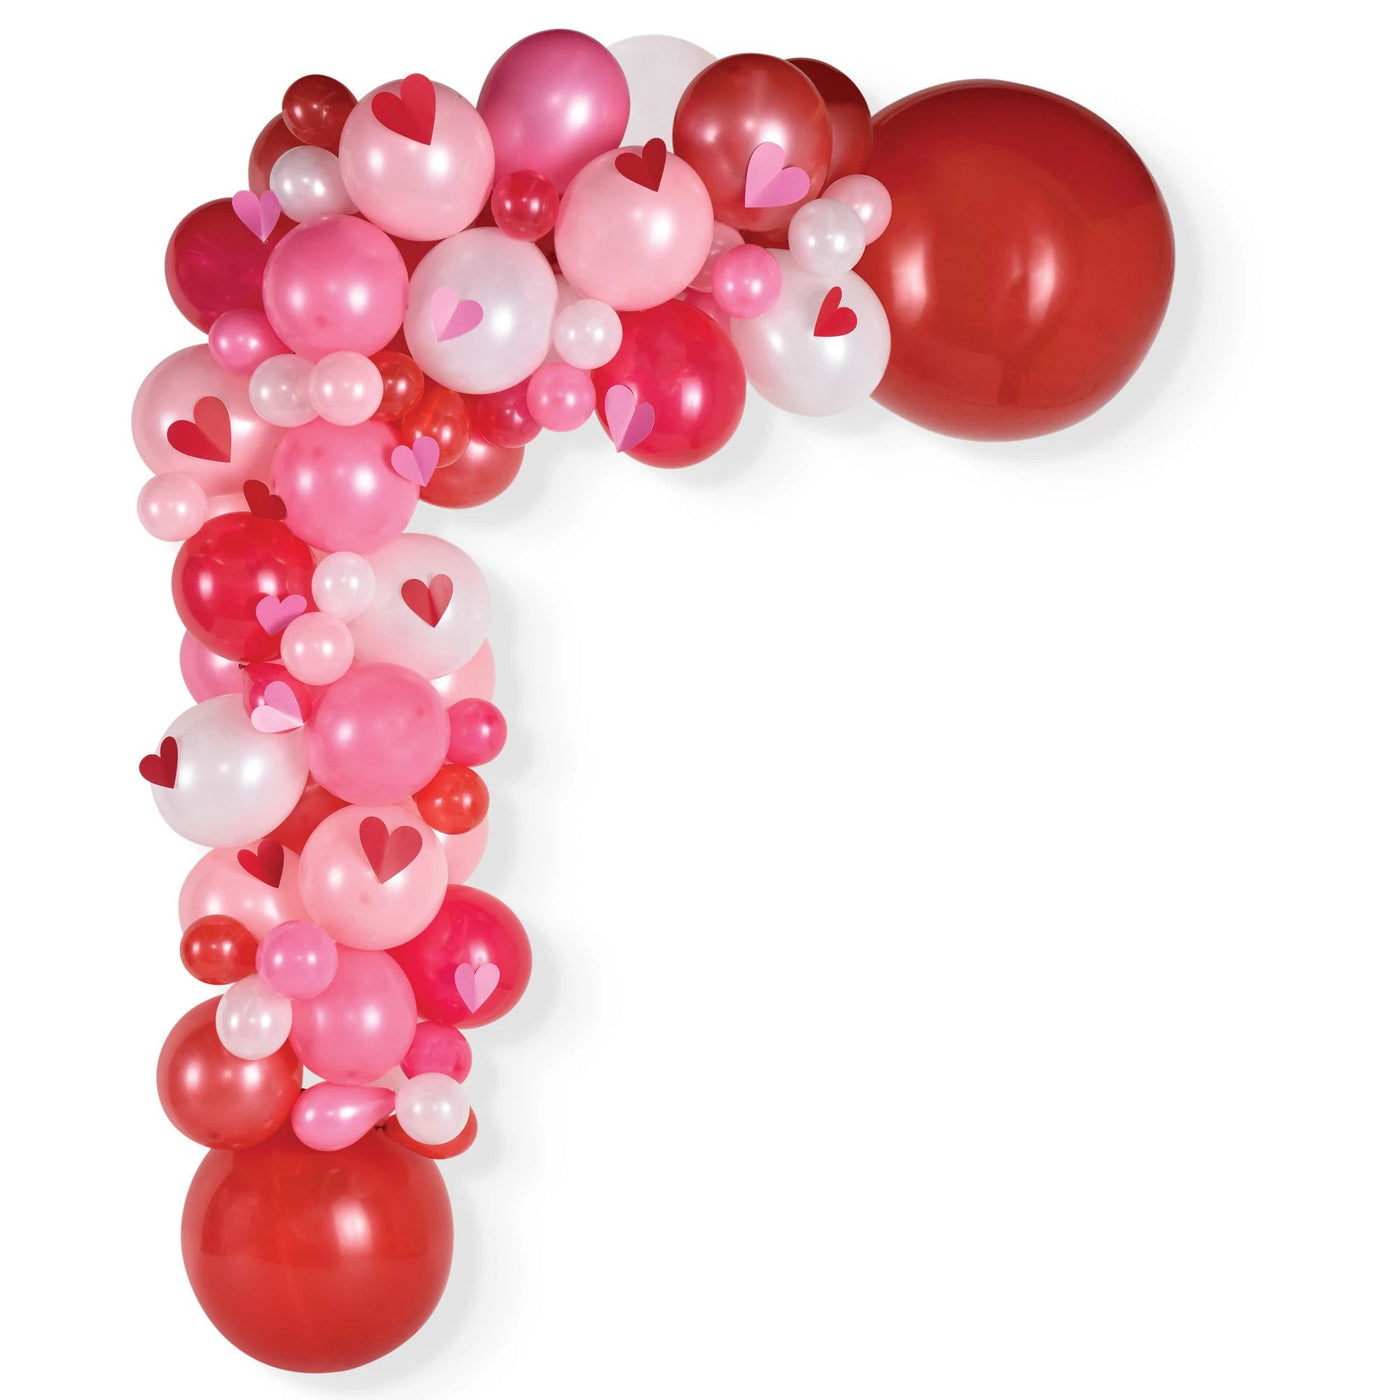 Balloon Garland Kit - Red-White-Pink Hearts